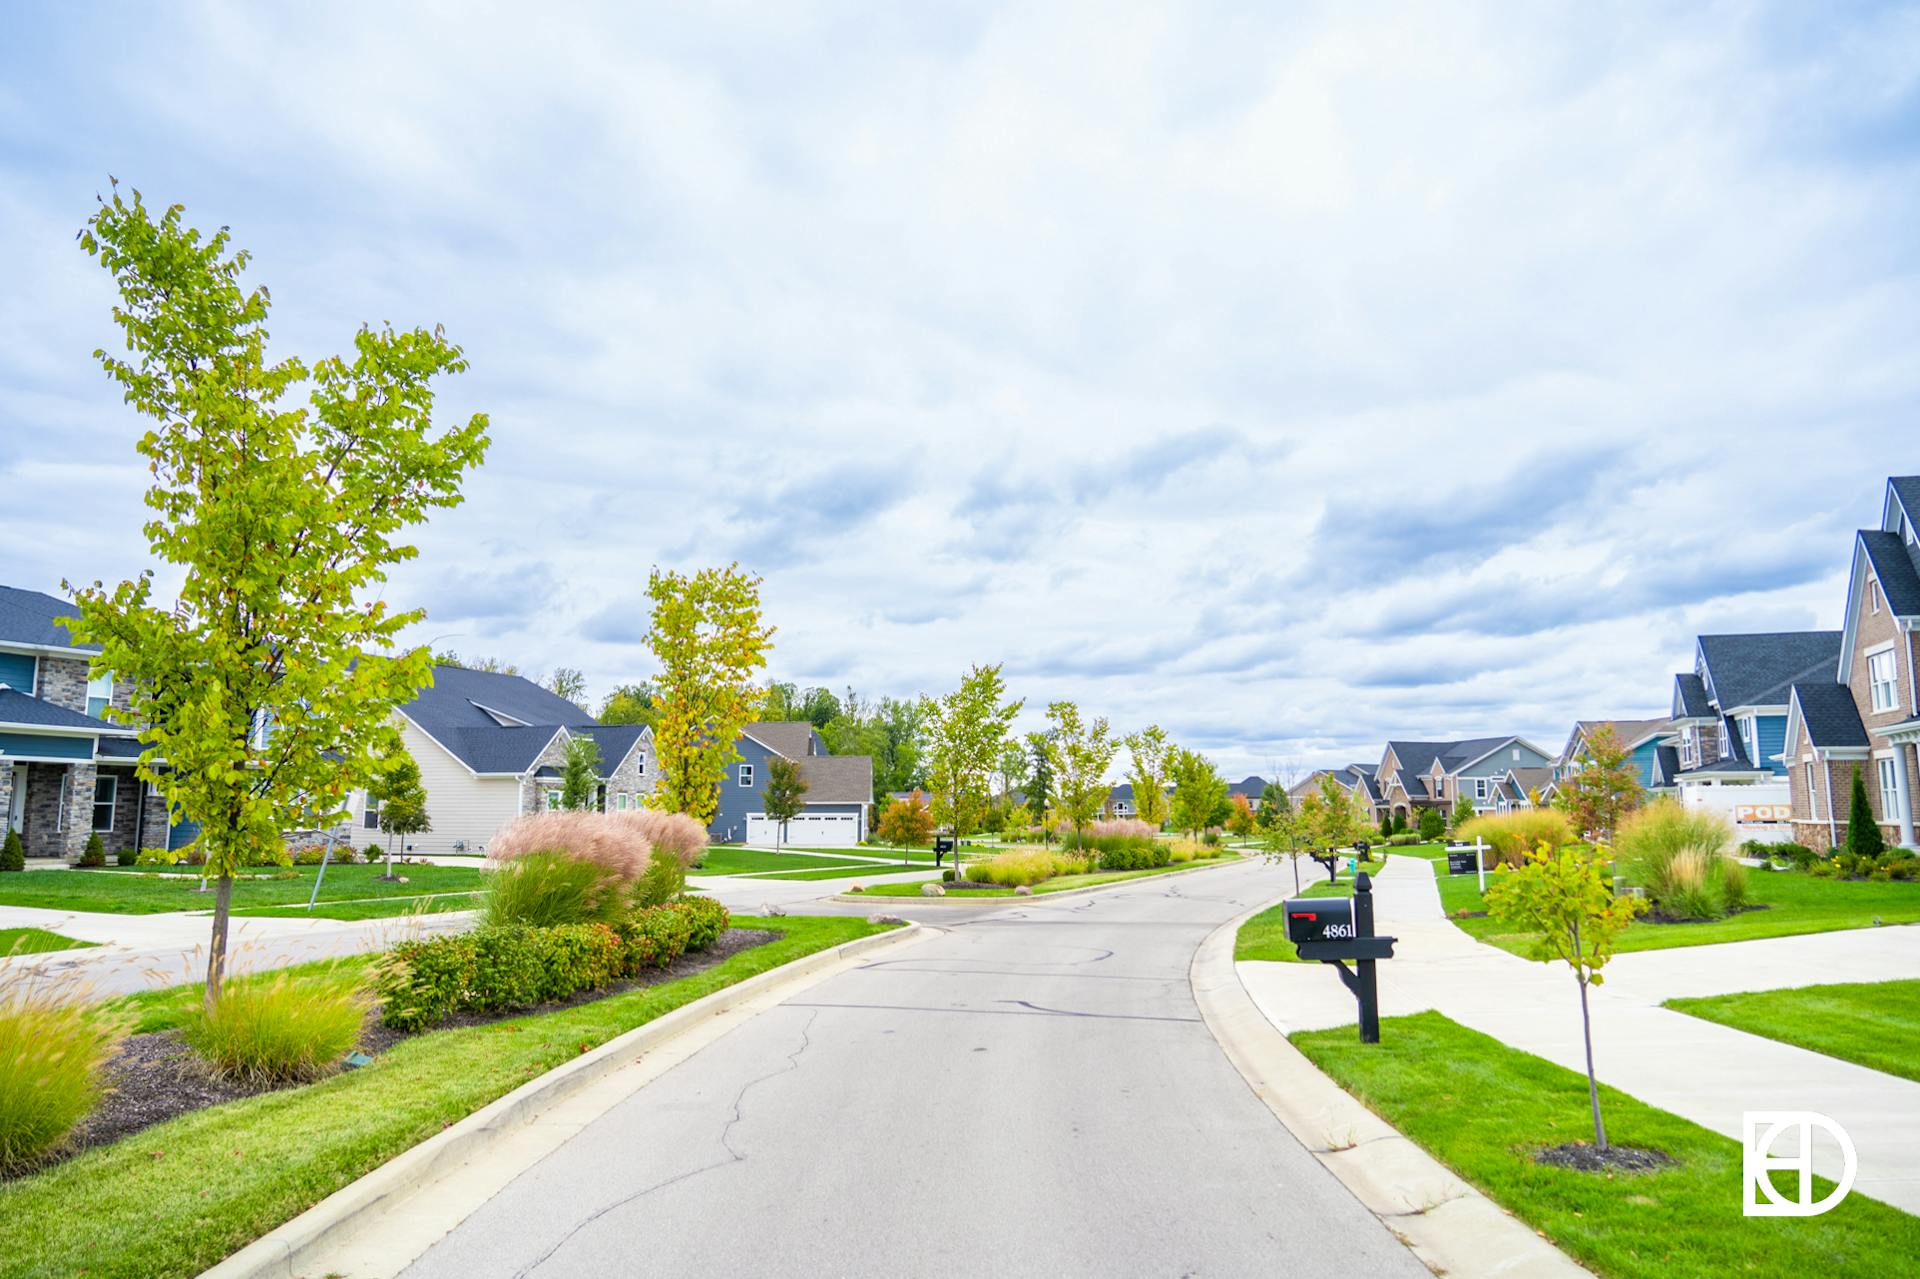 Photo of neighborhood boulevard in Hampshire in Zionsville, Indiana.